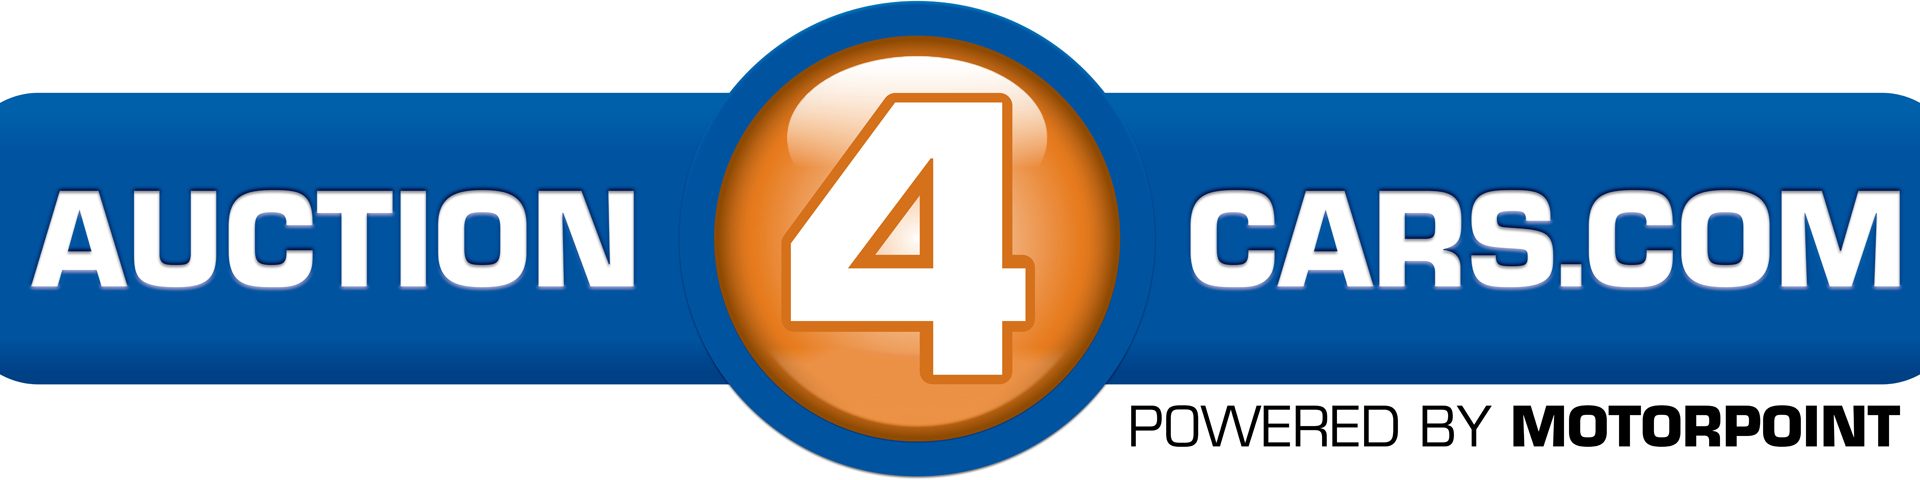 Auction4Cars Logo Final